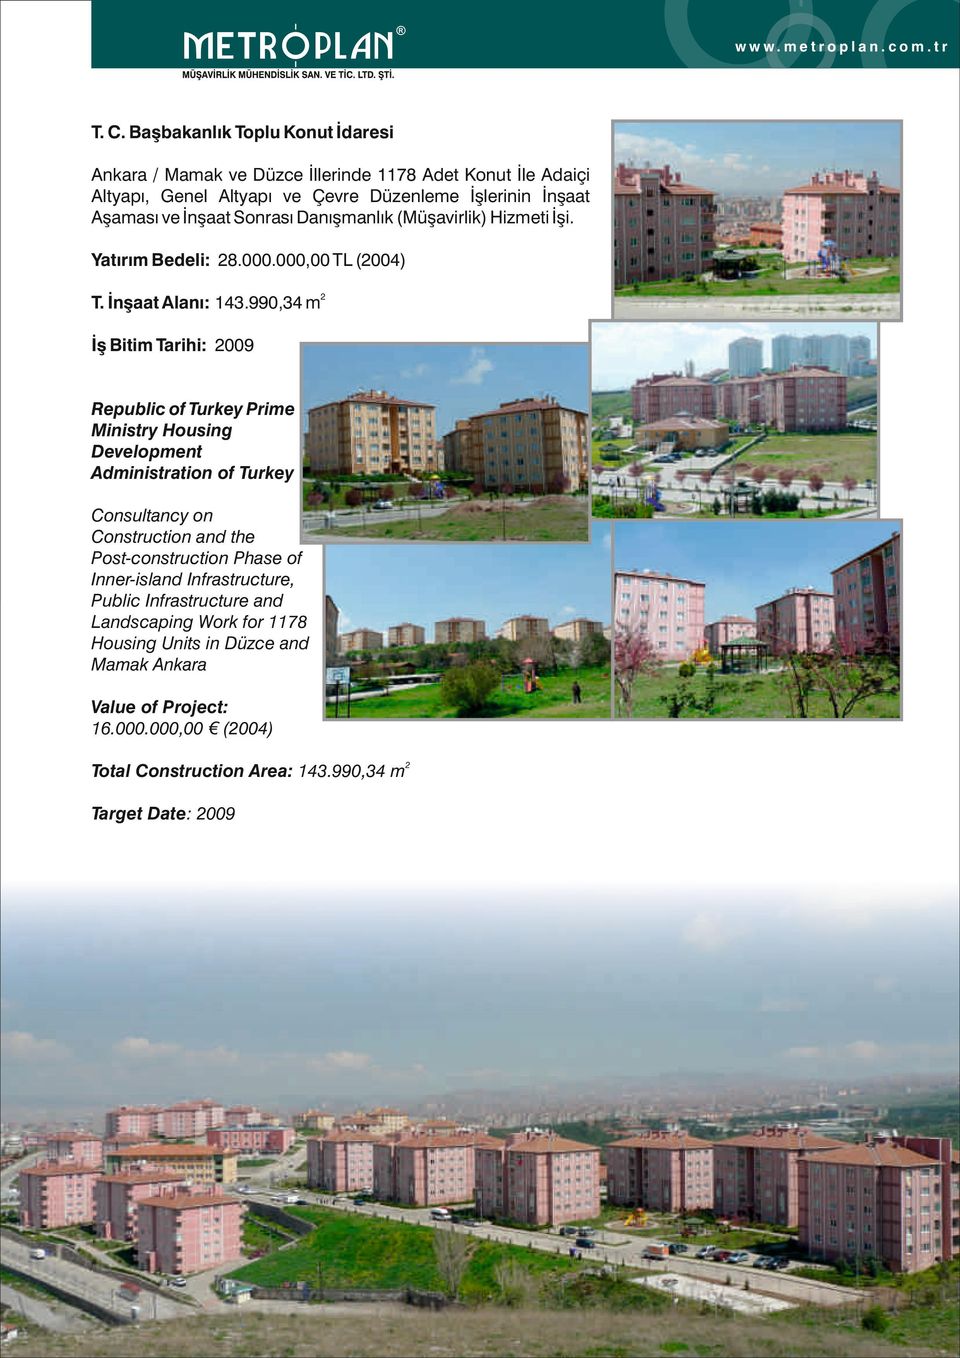 990,34 m İş Bitim Tarihi: 009 Republic of Turkey Prime Ministry Housing Development Administration of Turkey Consultancy on Construction and the Post-construction